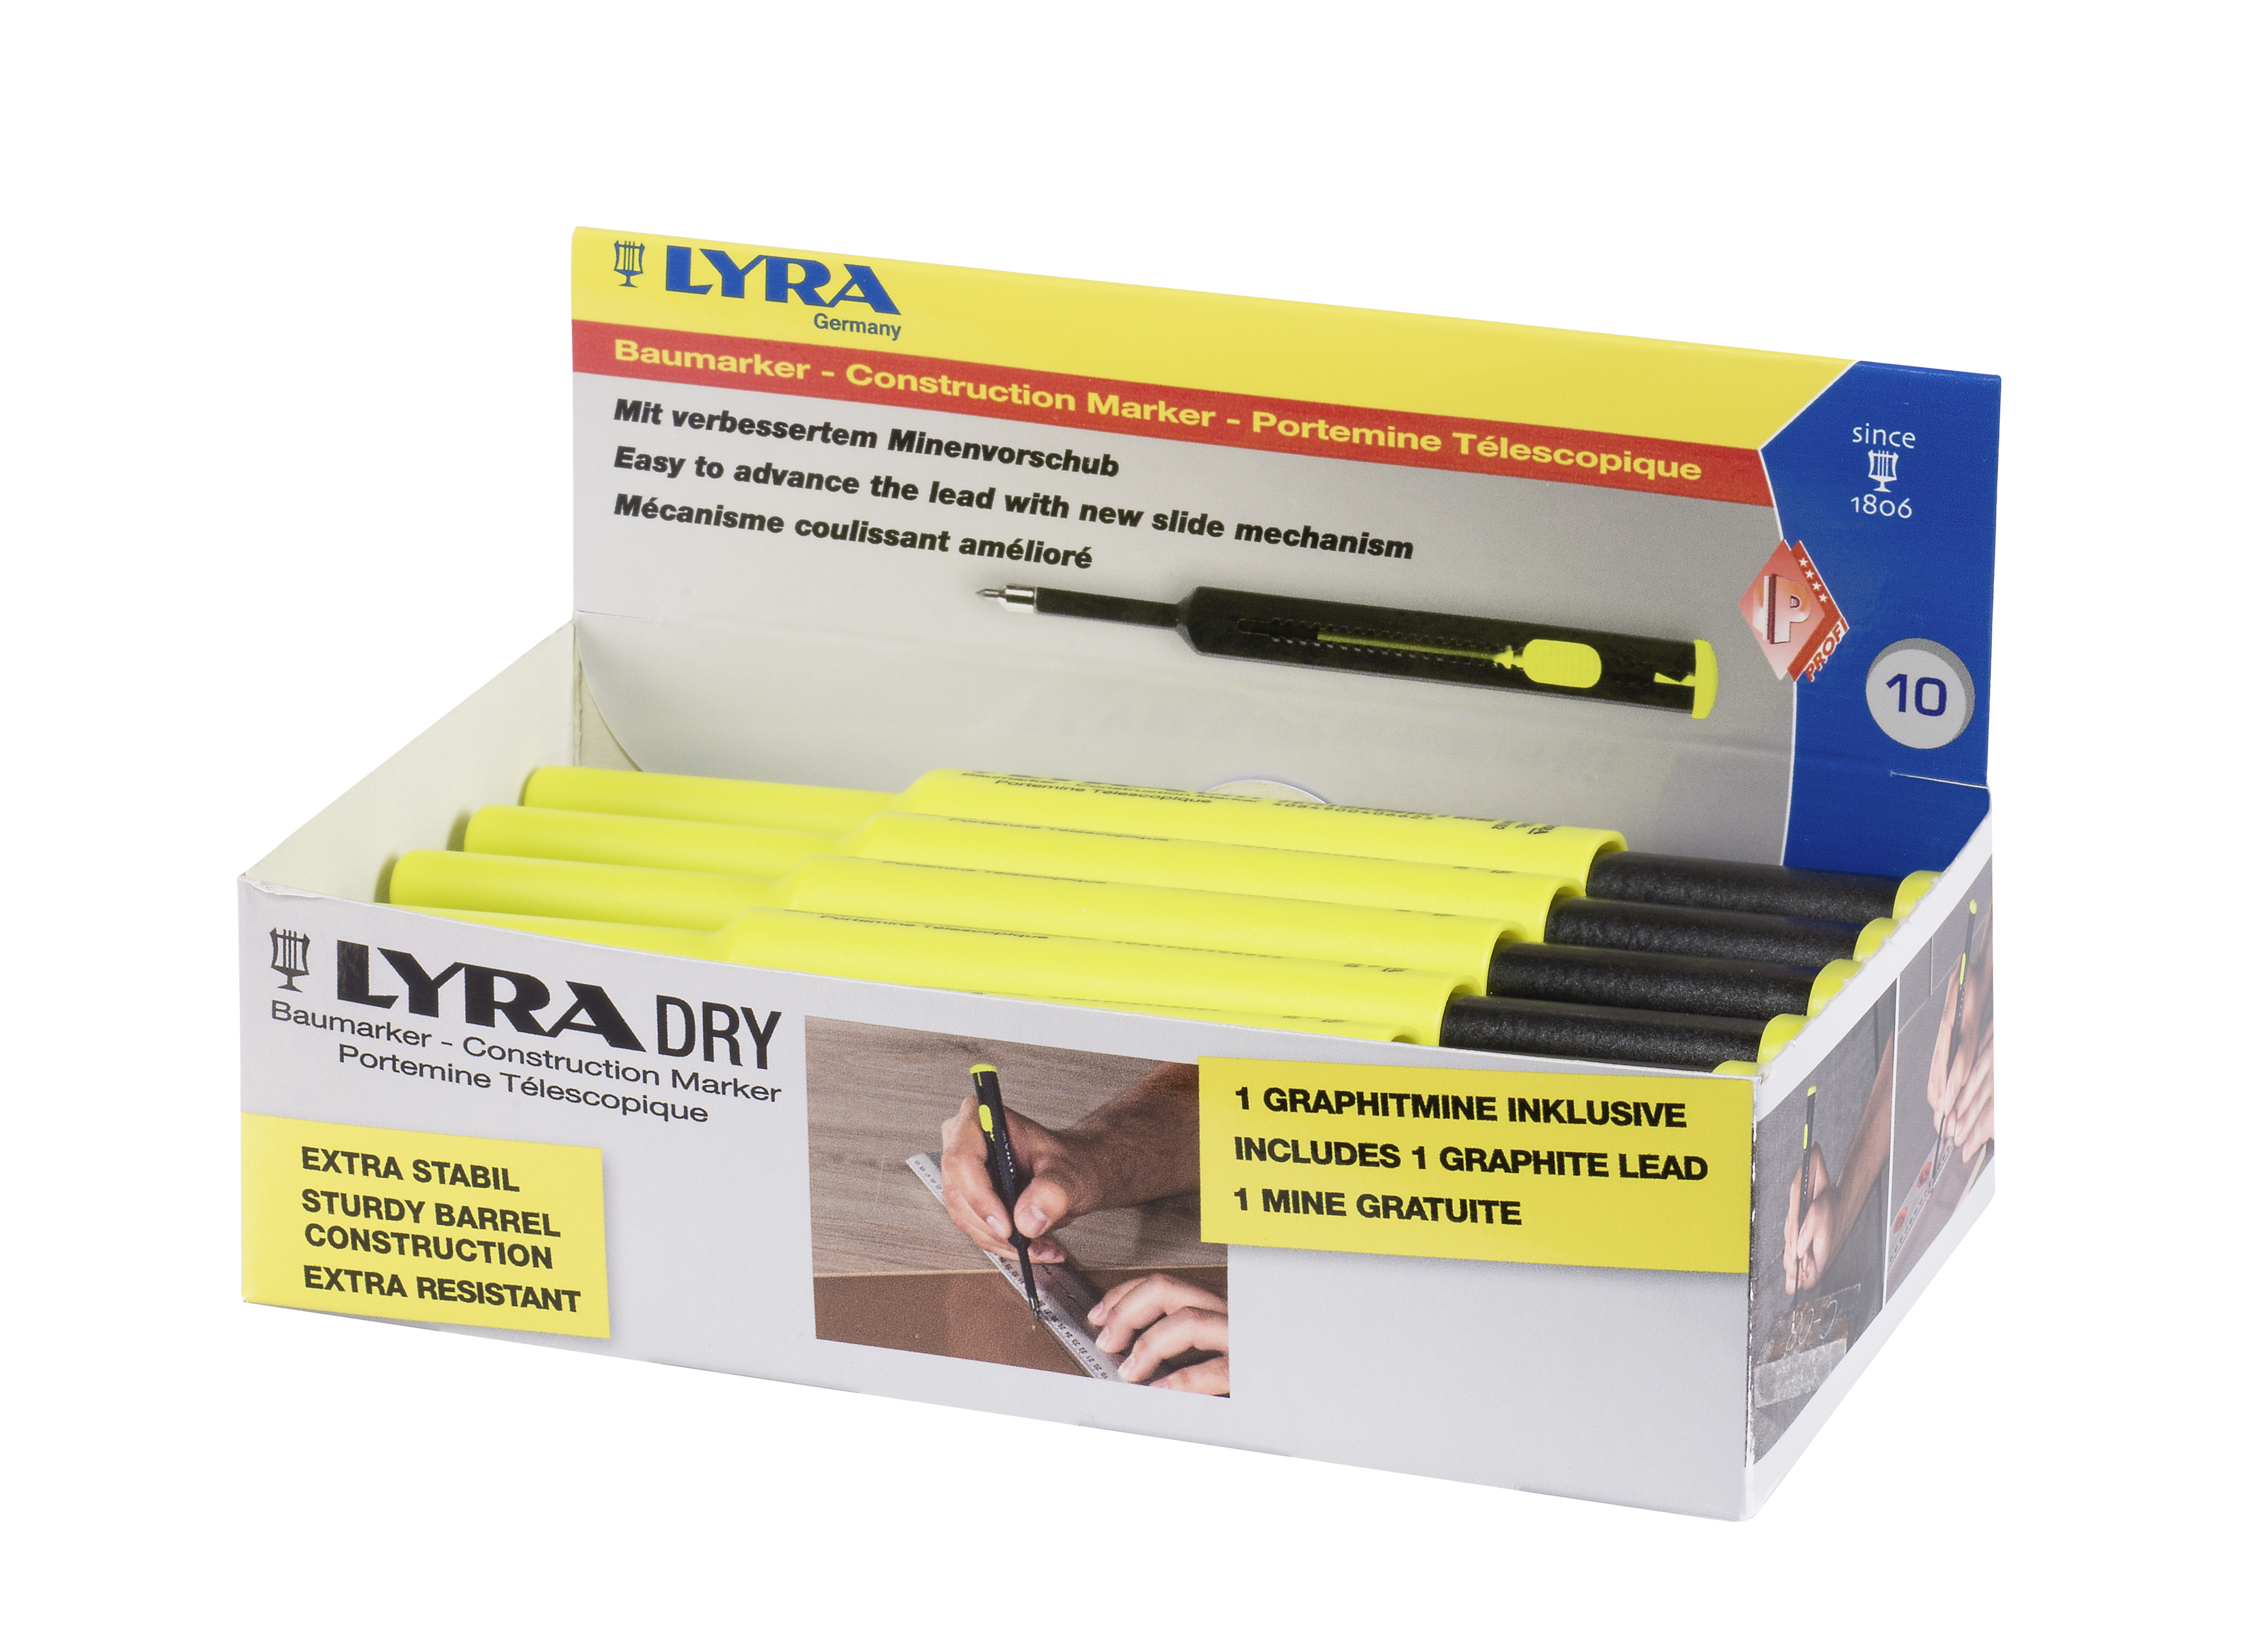 TRIUSO Baumarker Lyra-Dry Graphit 2B Spezialcl. Köcherschoner